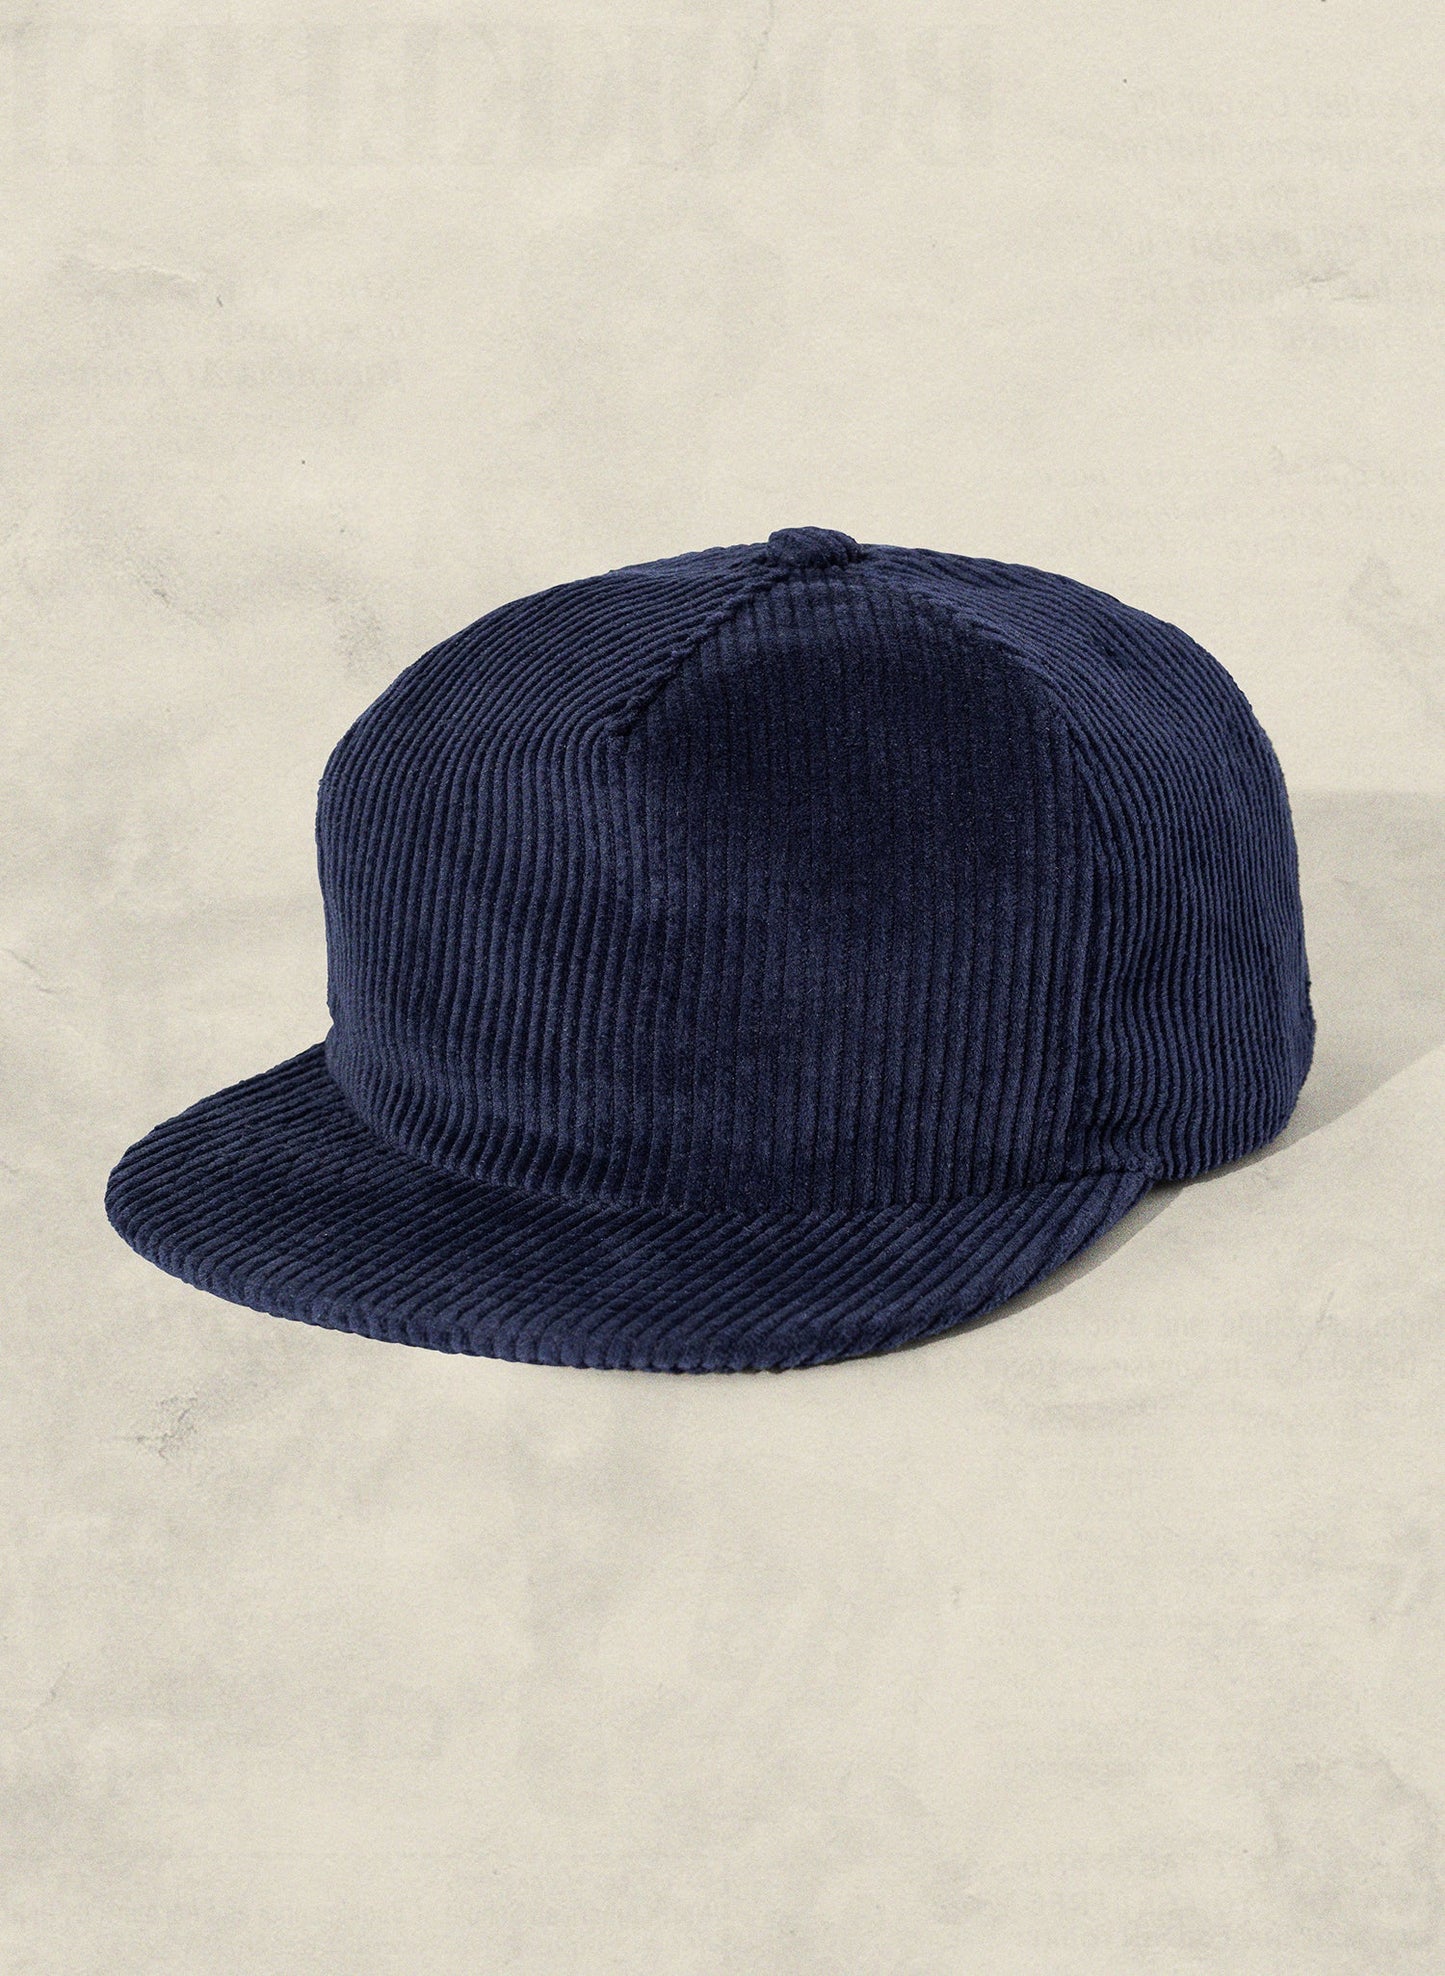 Weld Mfg Field Trip Hat - Unstructured 5 panel corduroy strapback hat, vintage inspired baseball hat, navy